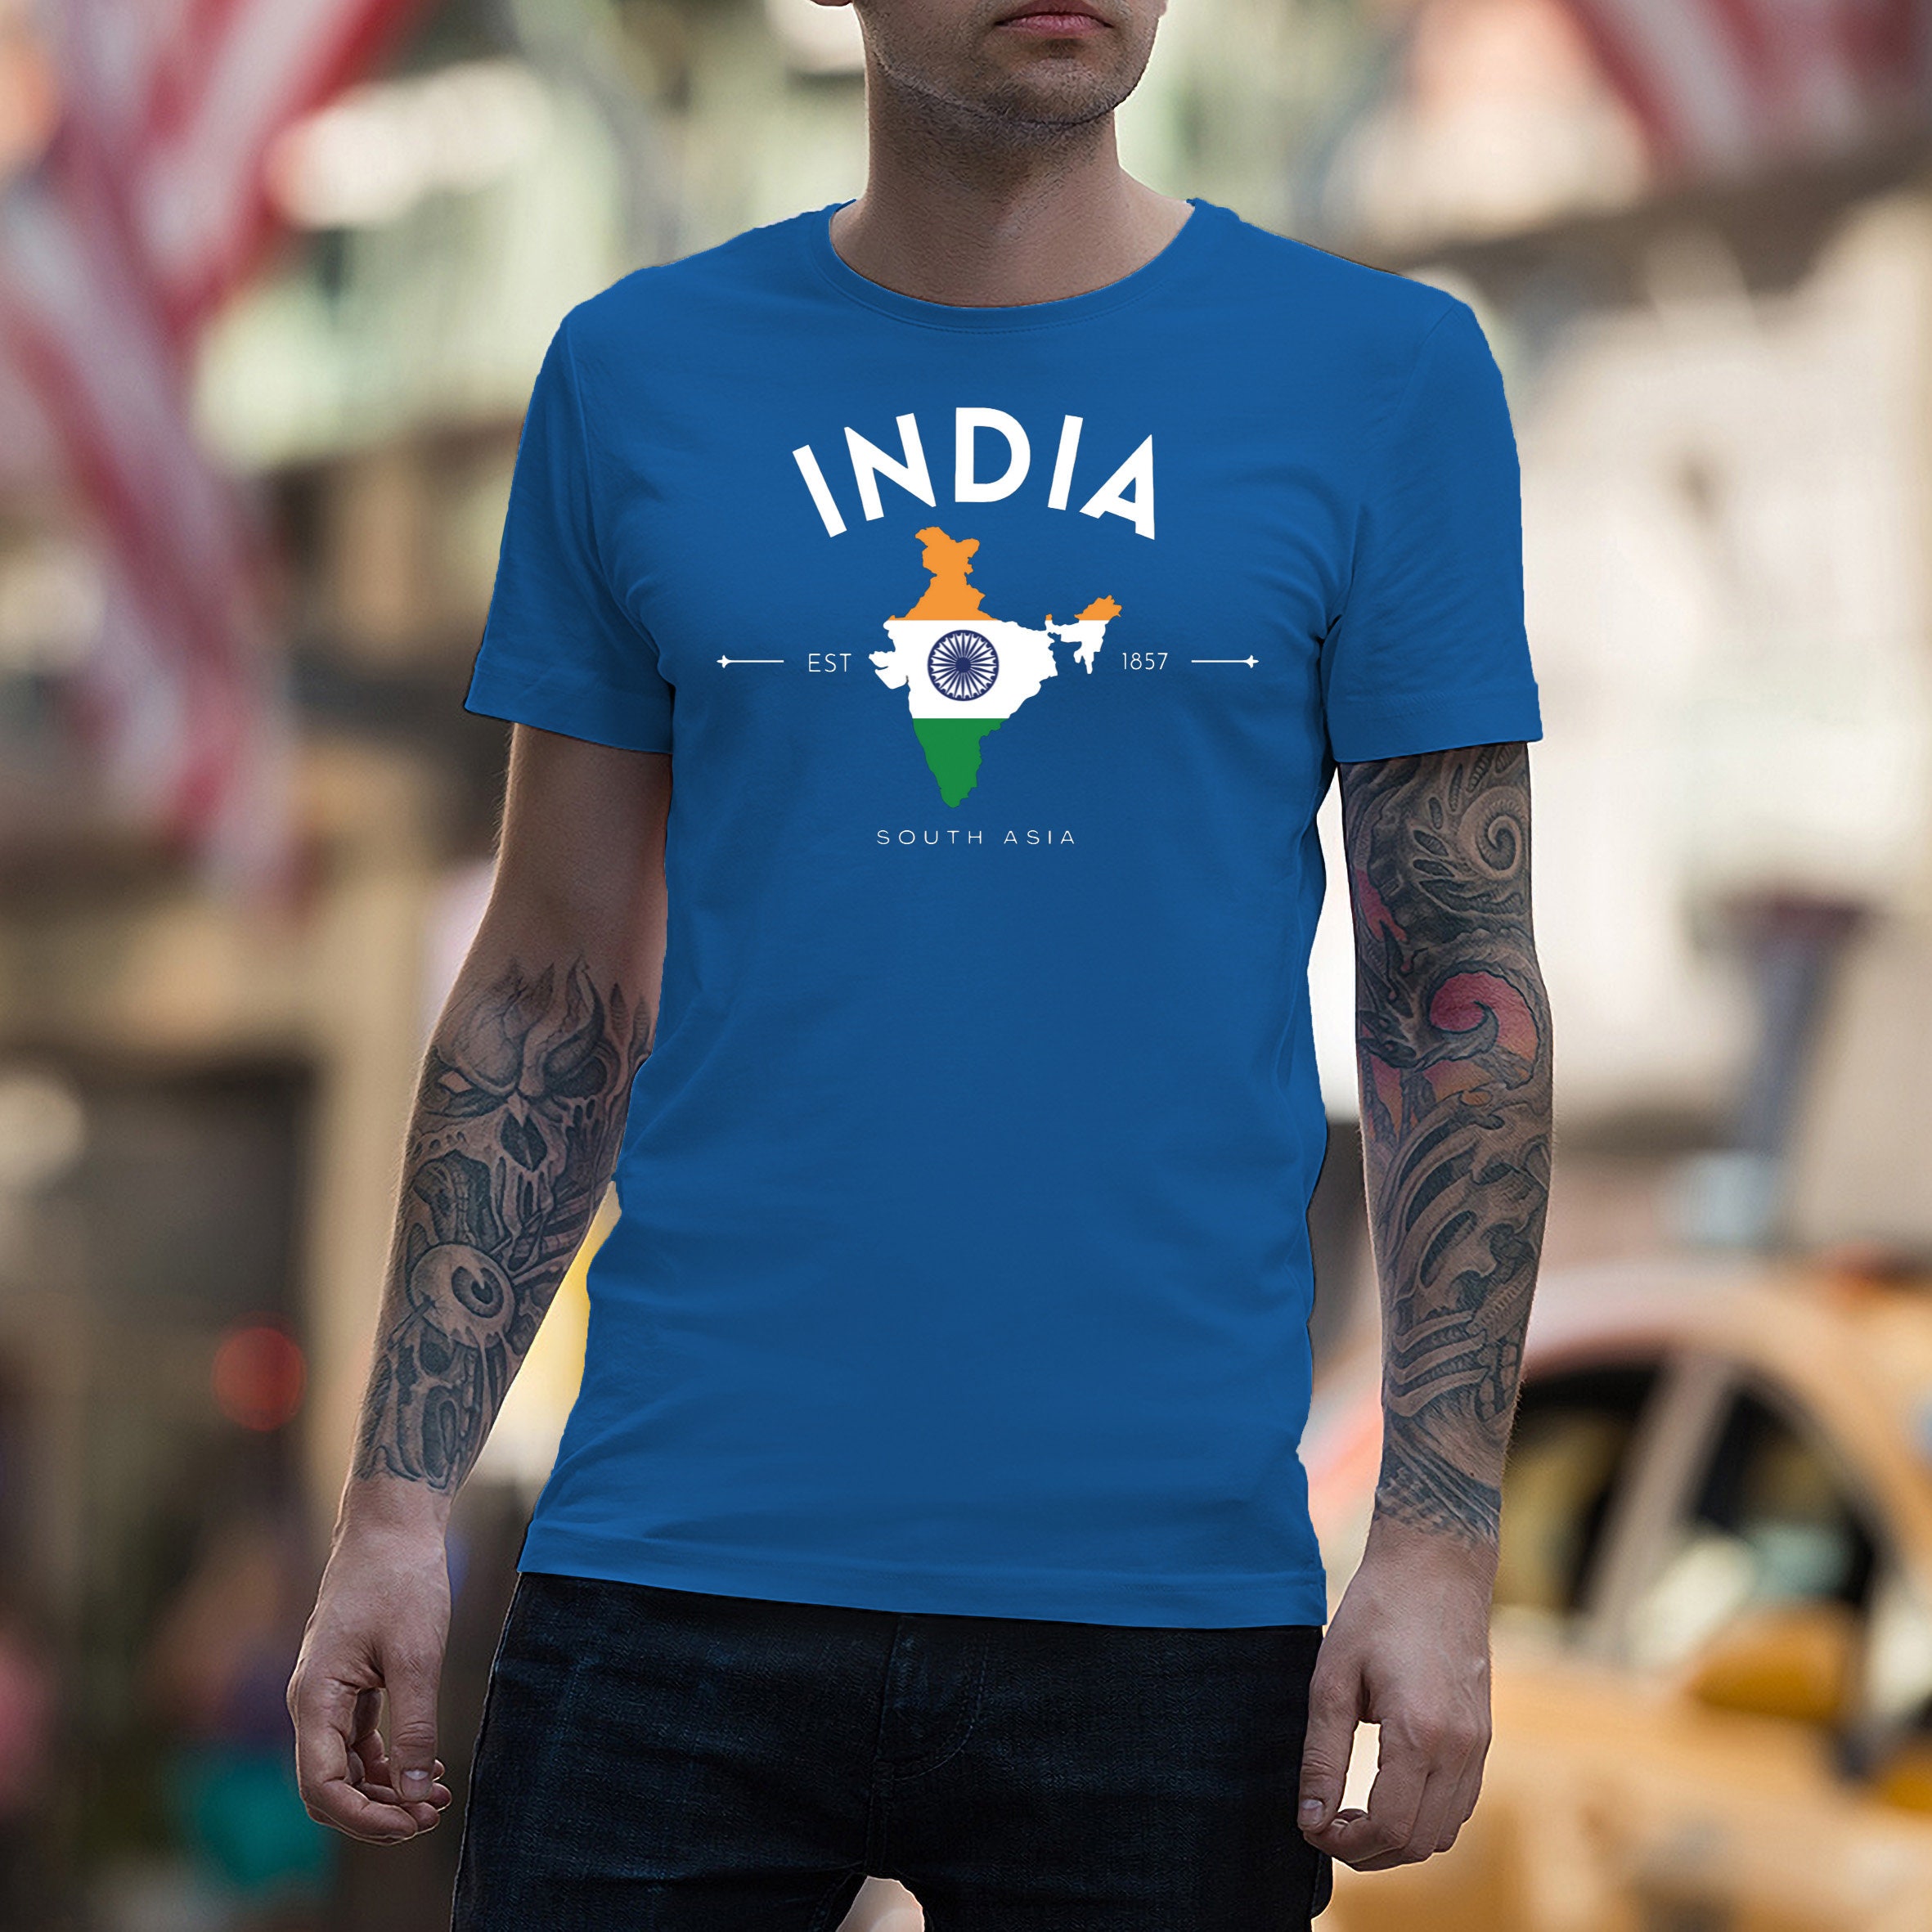 Indians Short Sleeves T-shirt for Men Women Summer Casual Retro